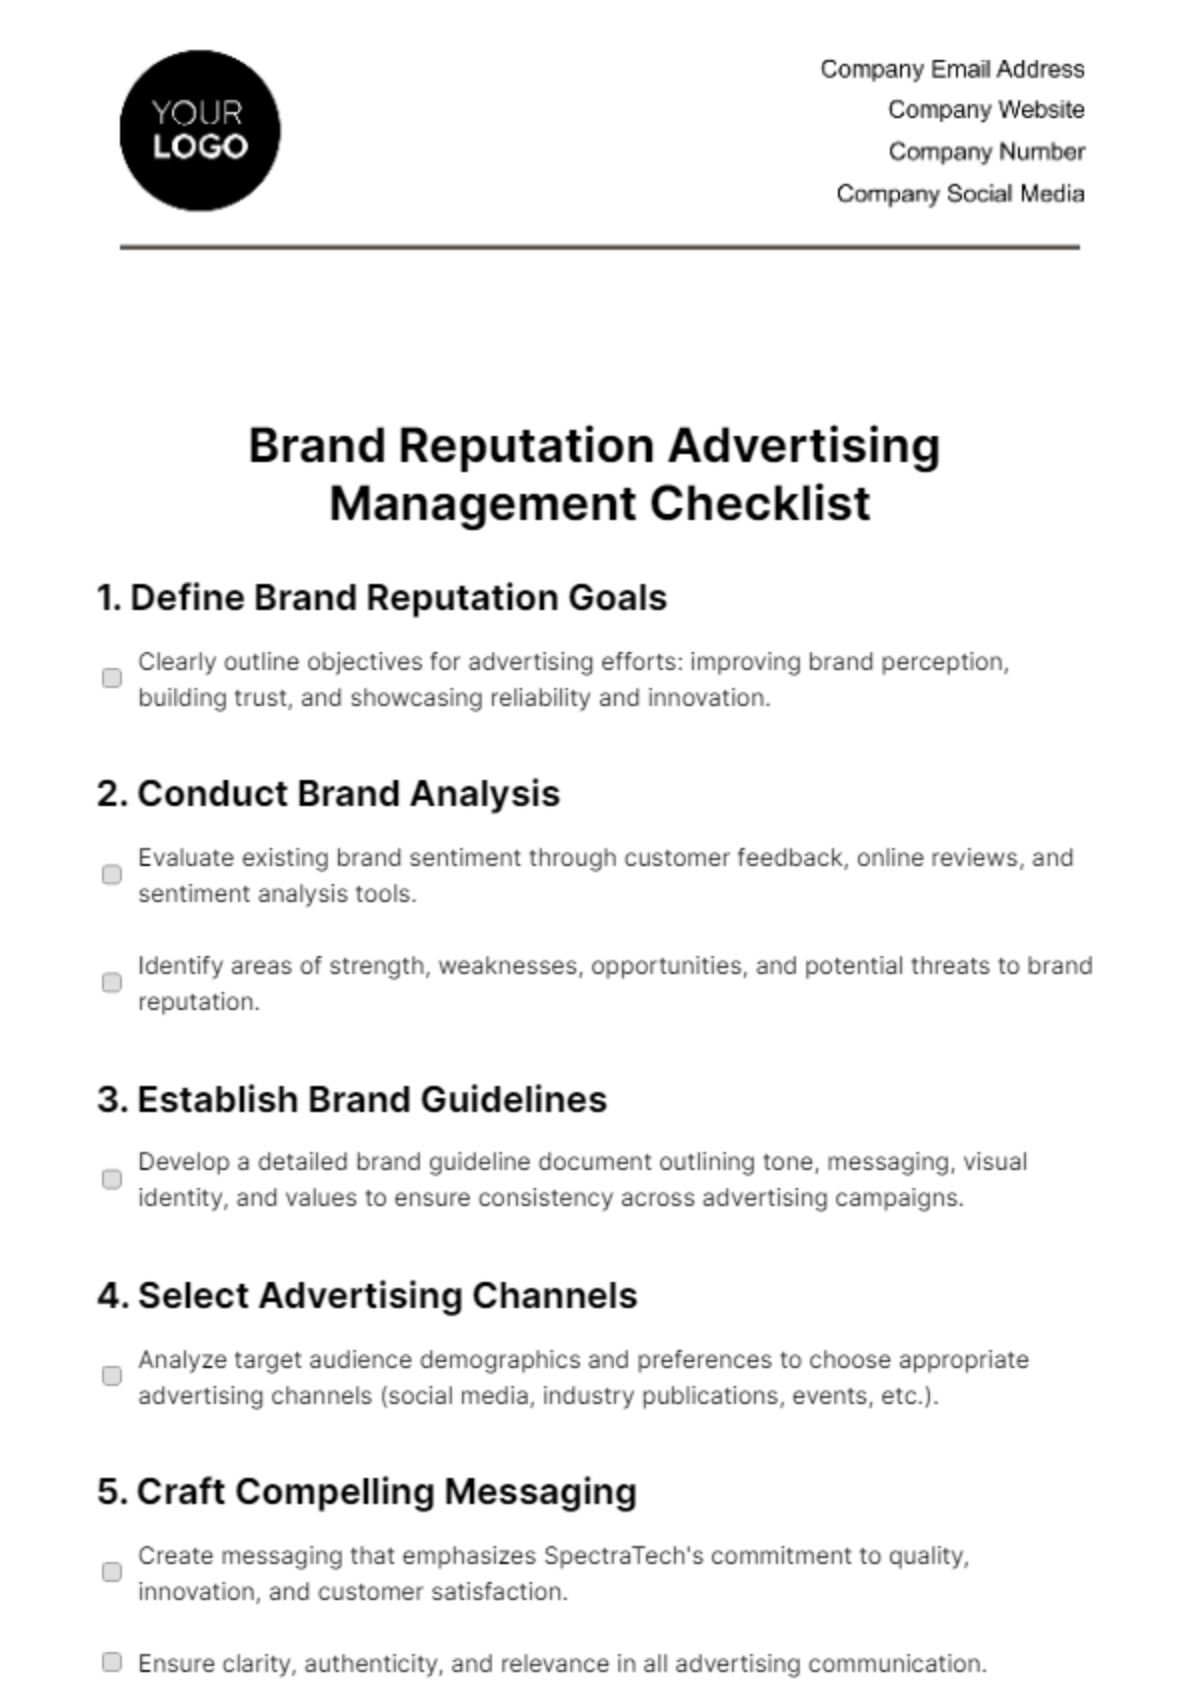 Free Brand Reputation Advertising Management Checklist Template